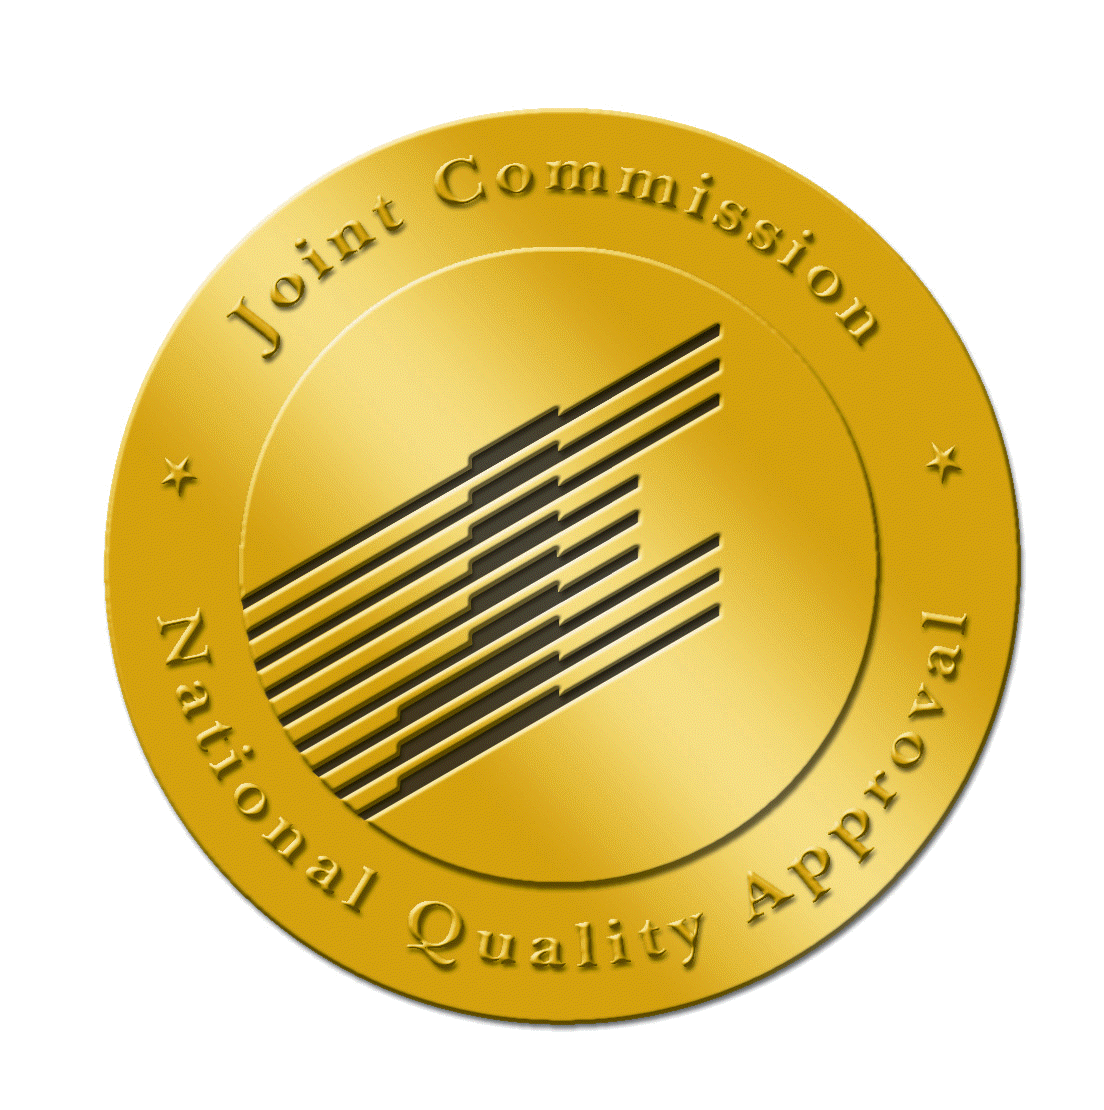 JCAHO Seal of Accreditation